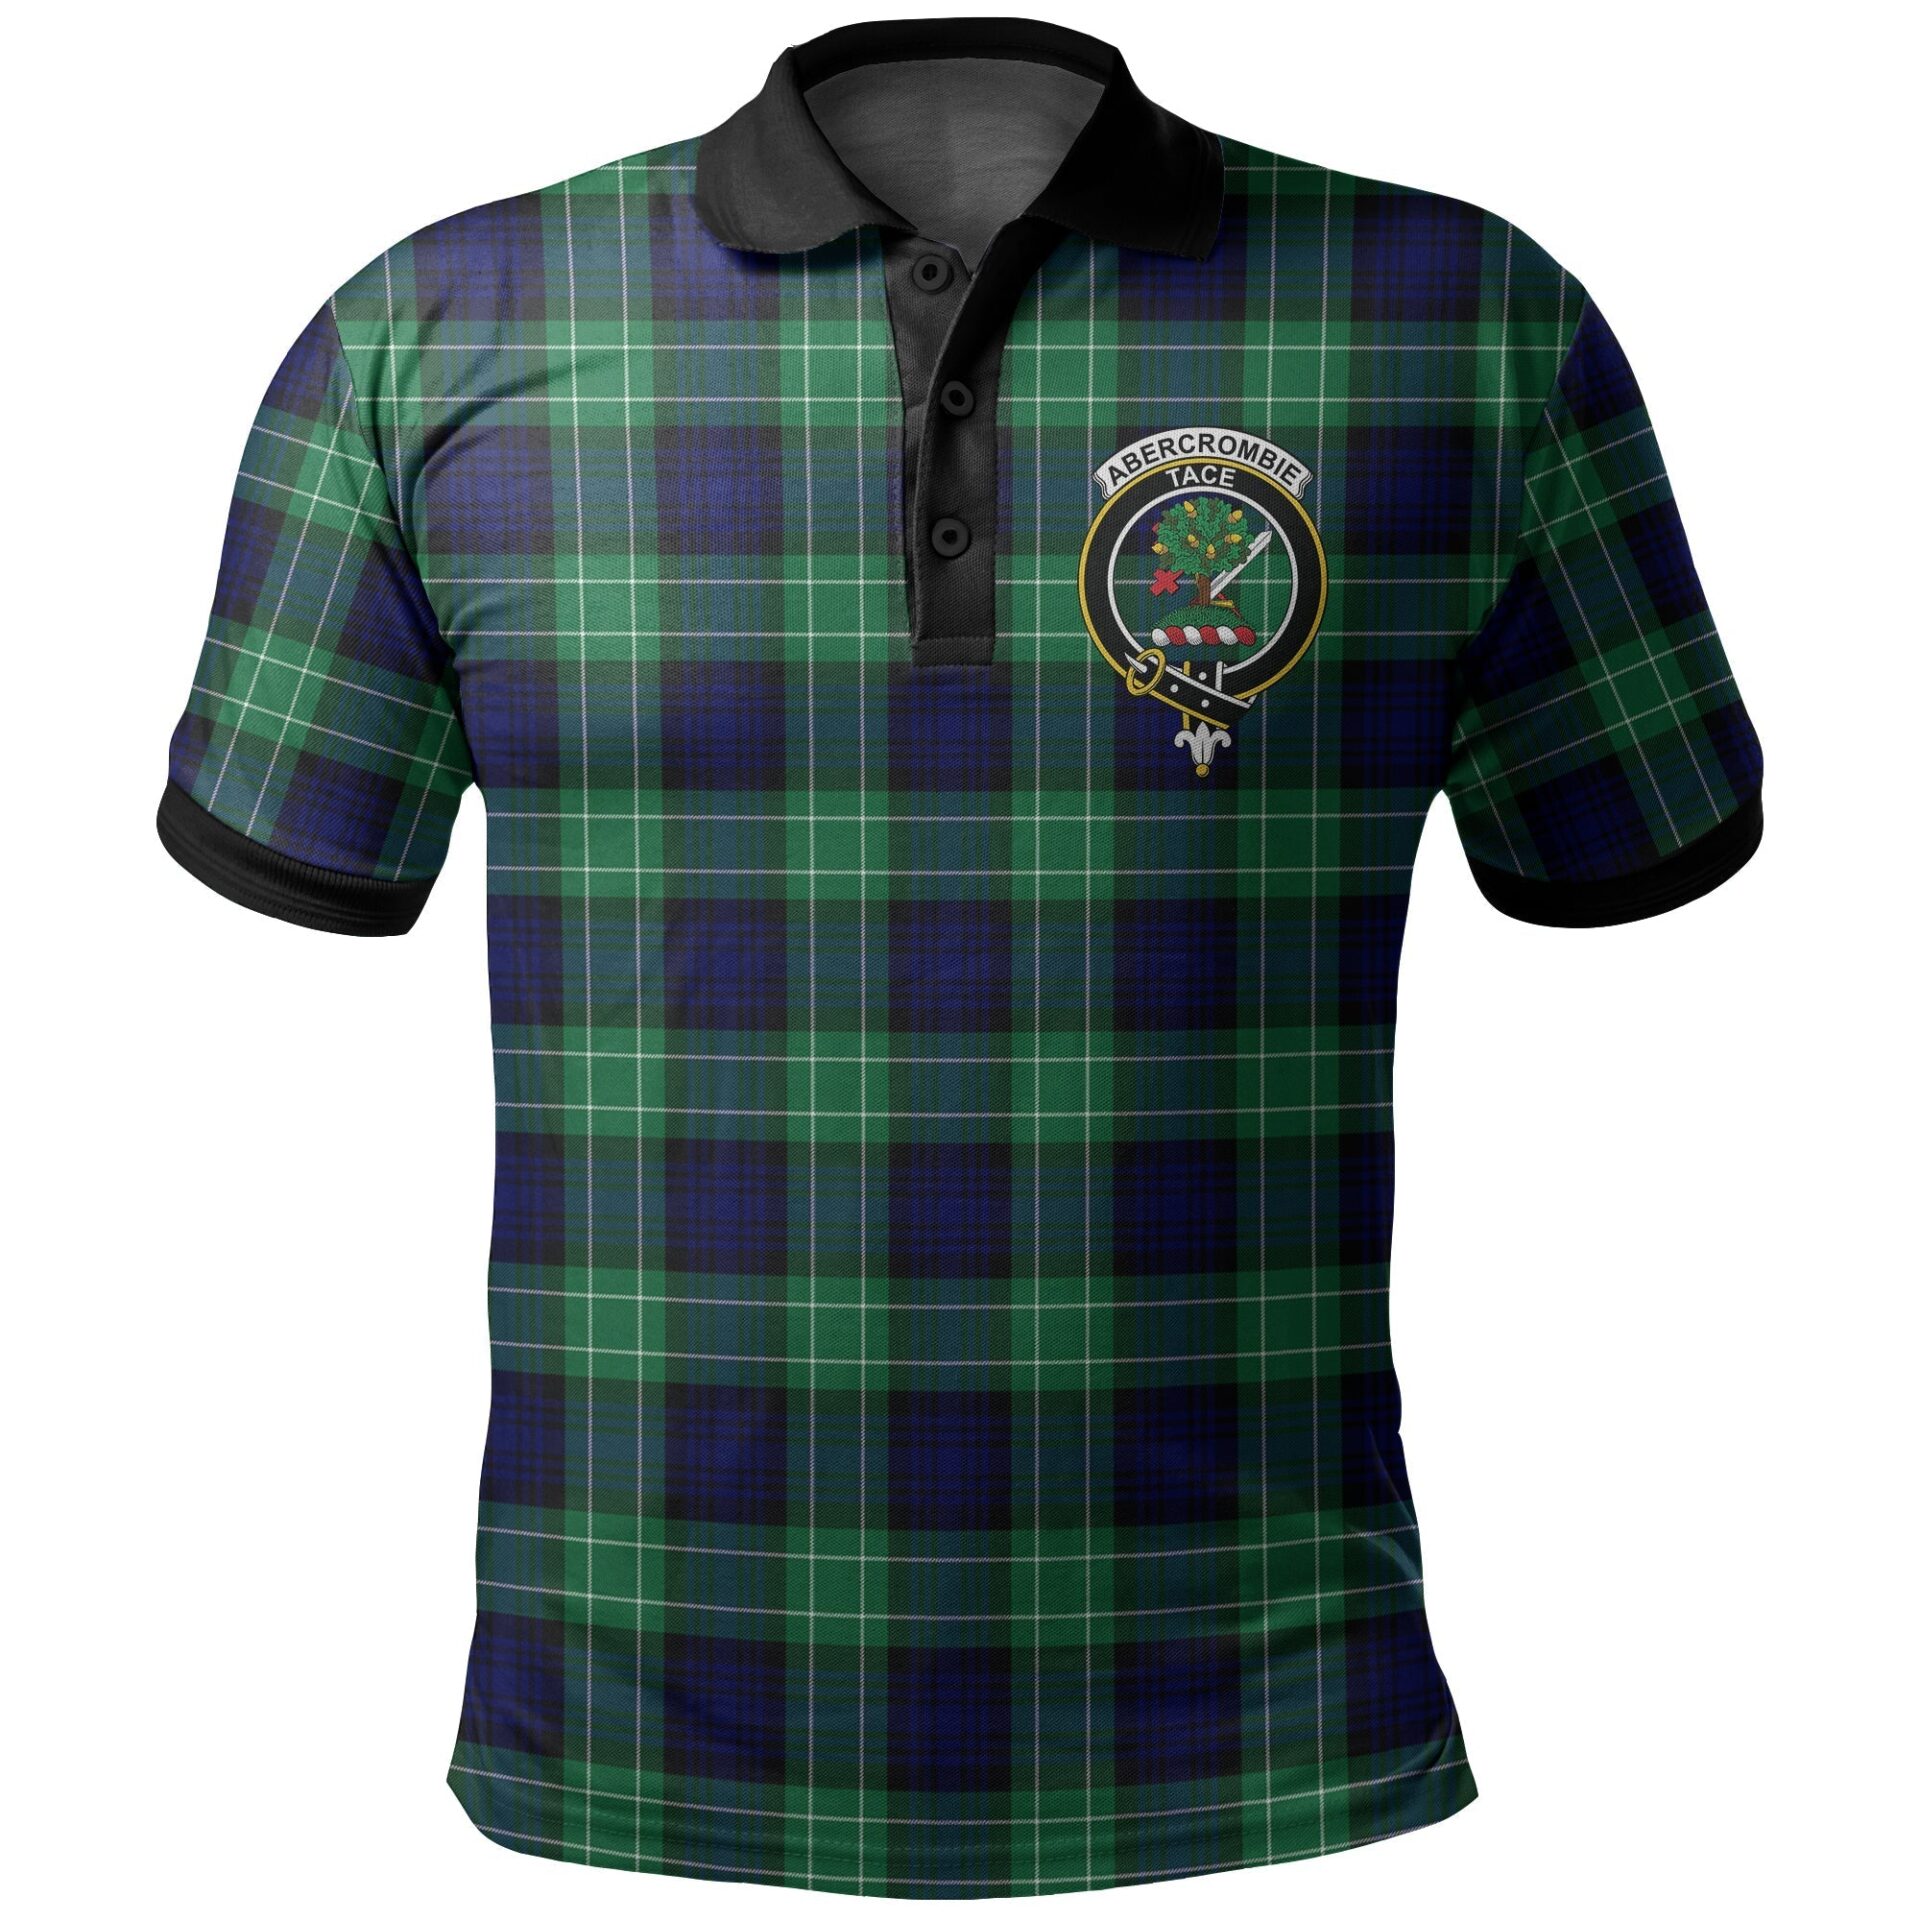 Abercrombie Tartan Crest Polo Shirt Black Neck 2 Style